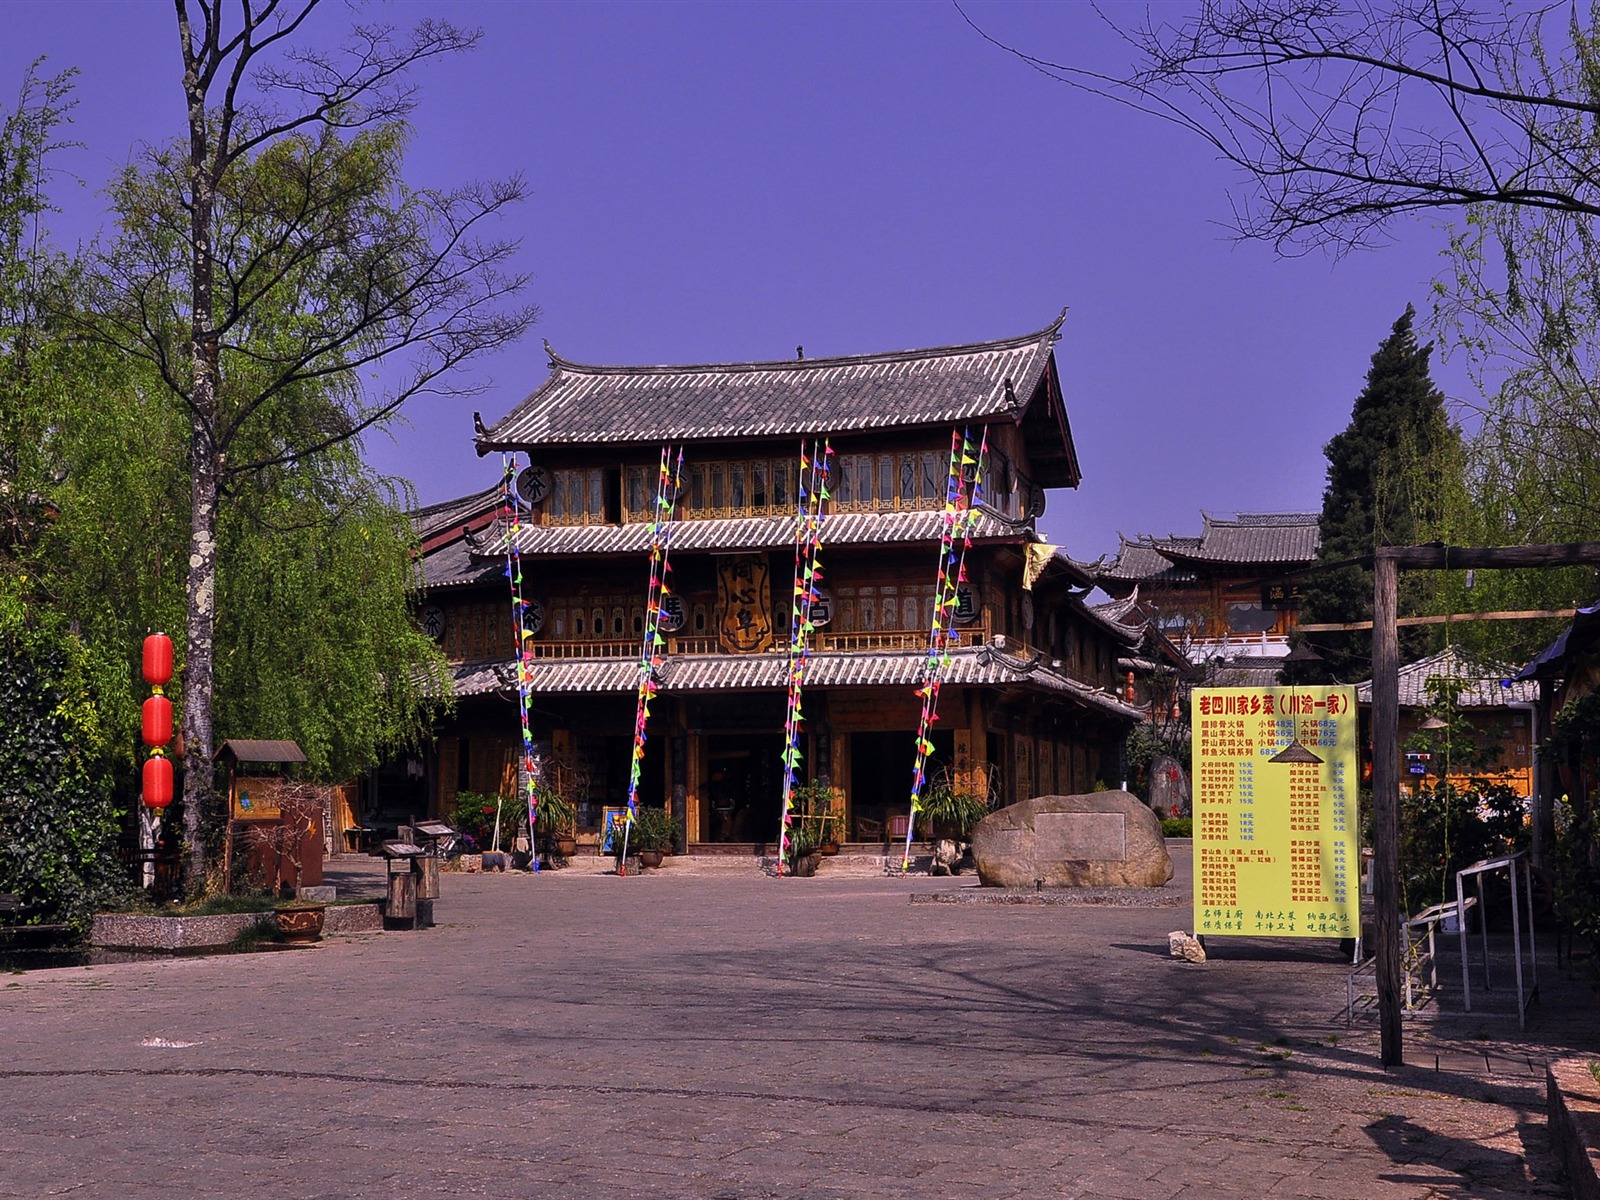 Lijiang ancient town atmosphere (2) (old Hong OK works) #18 - 1600x1200